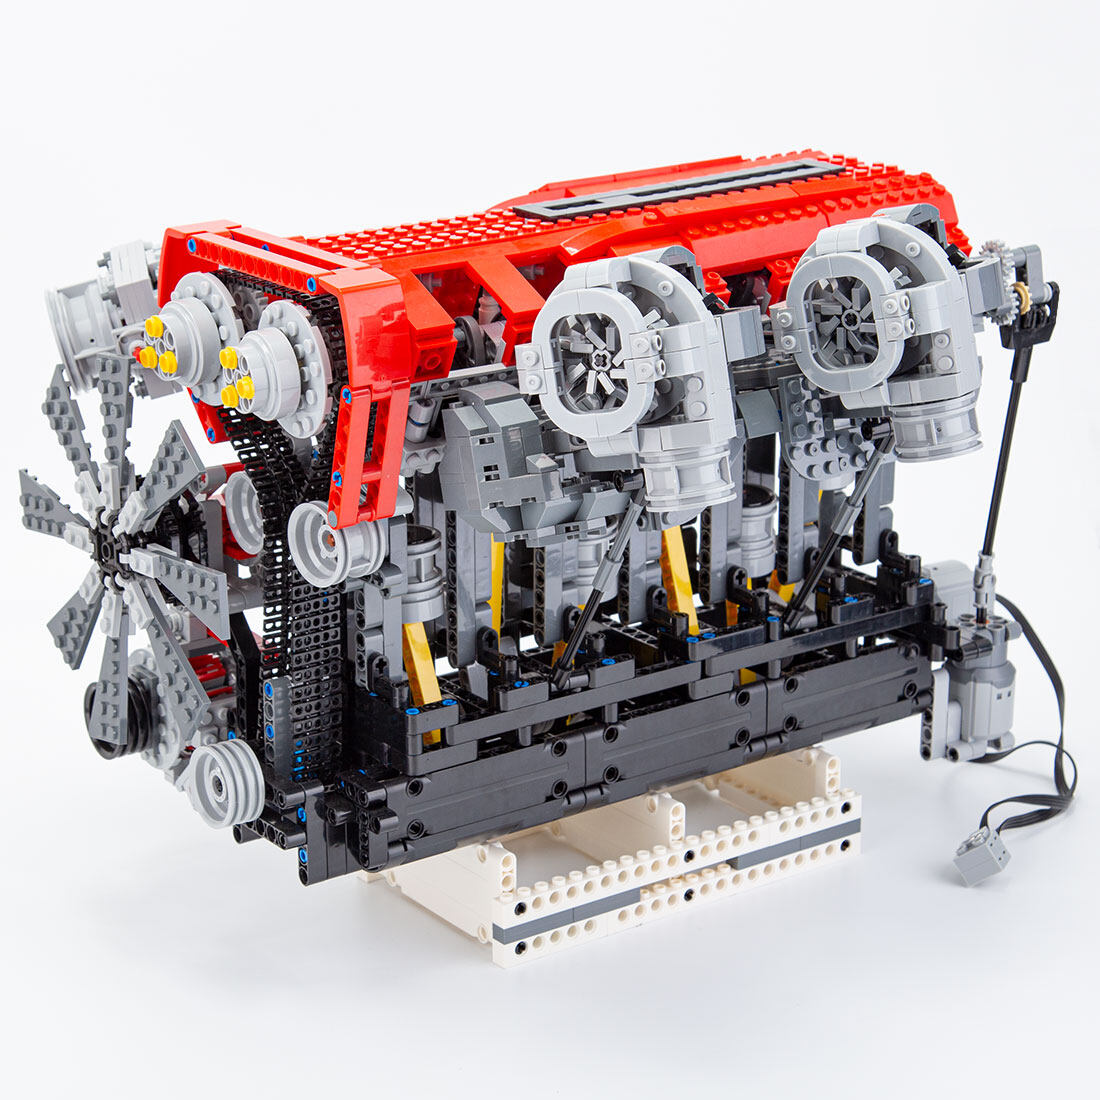 MOC RB-30 Six-Cylinder Four-Stroke Gasoline Engine Model Building Blocks Toy Set -1985PCS-Build Your Own L6 Engine enginediyshop